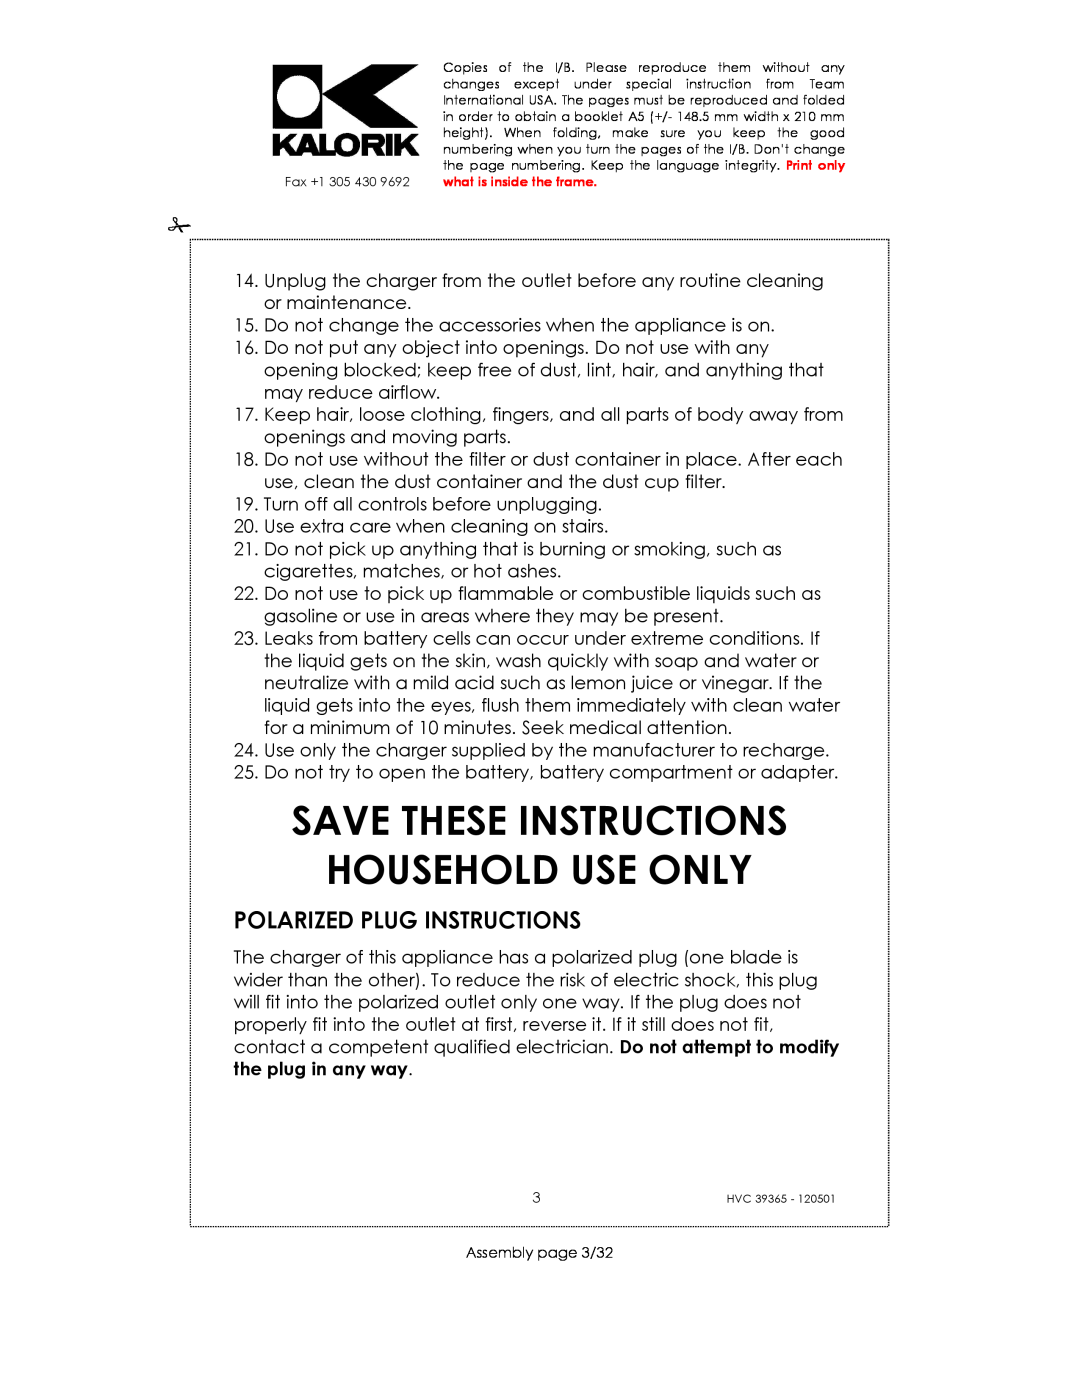 Kalorik HVC 39365 manual Save These Instructions Household Use Only, Polarized Plug Instructions 